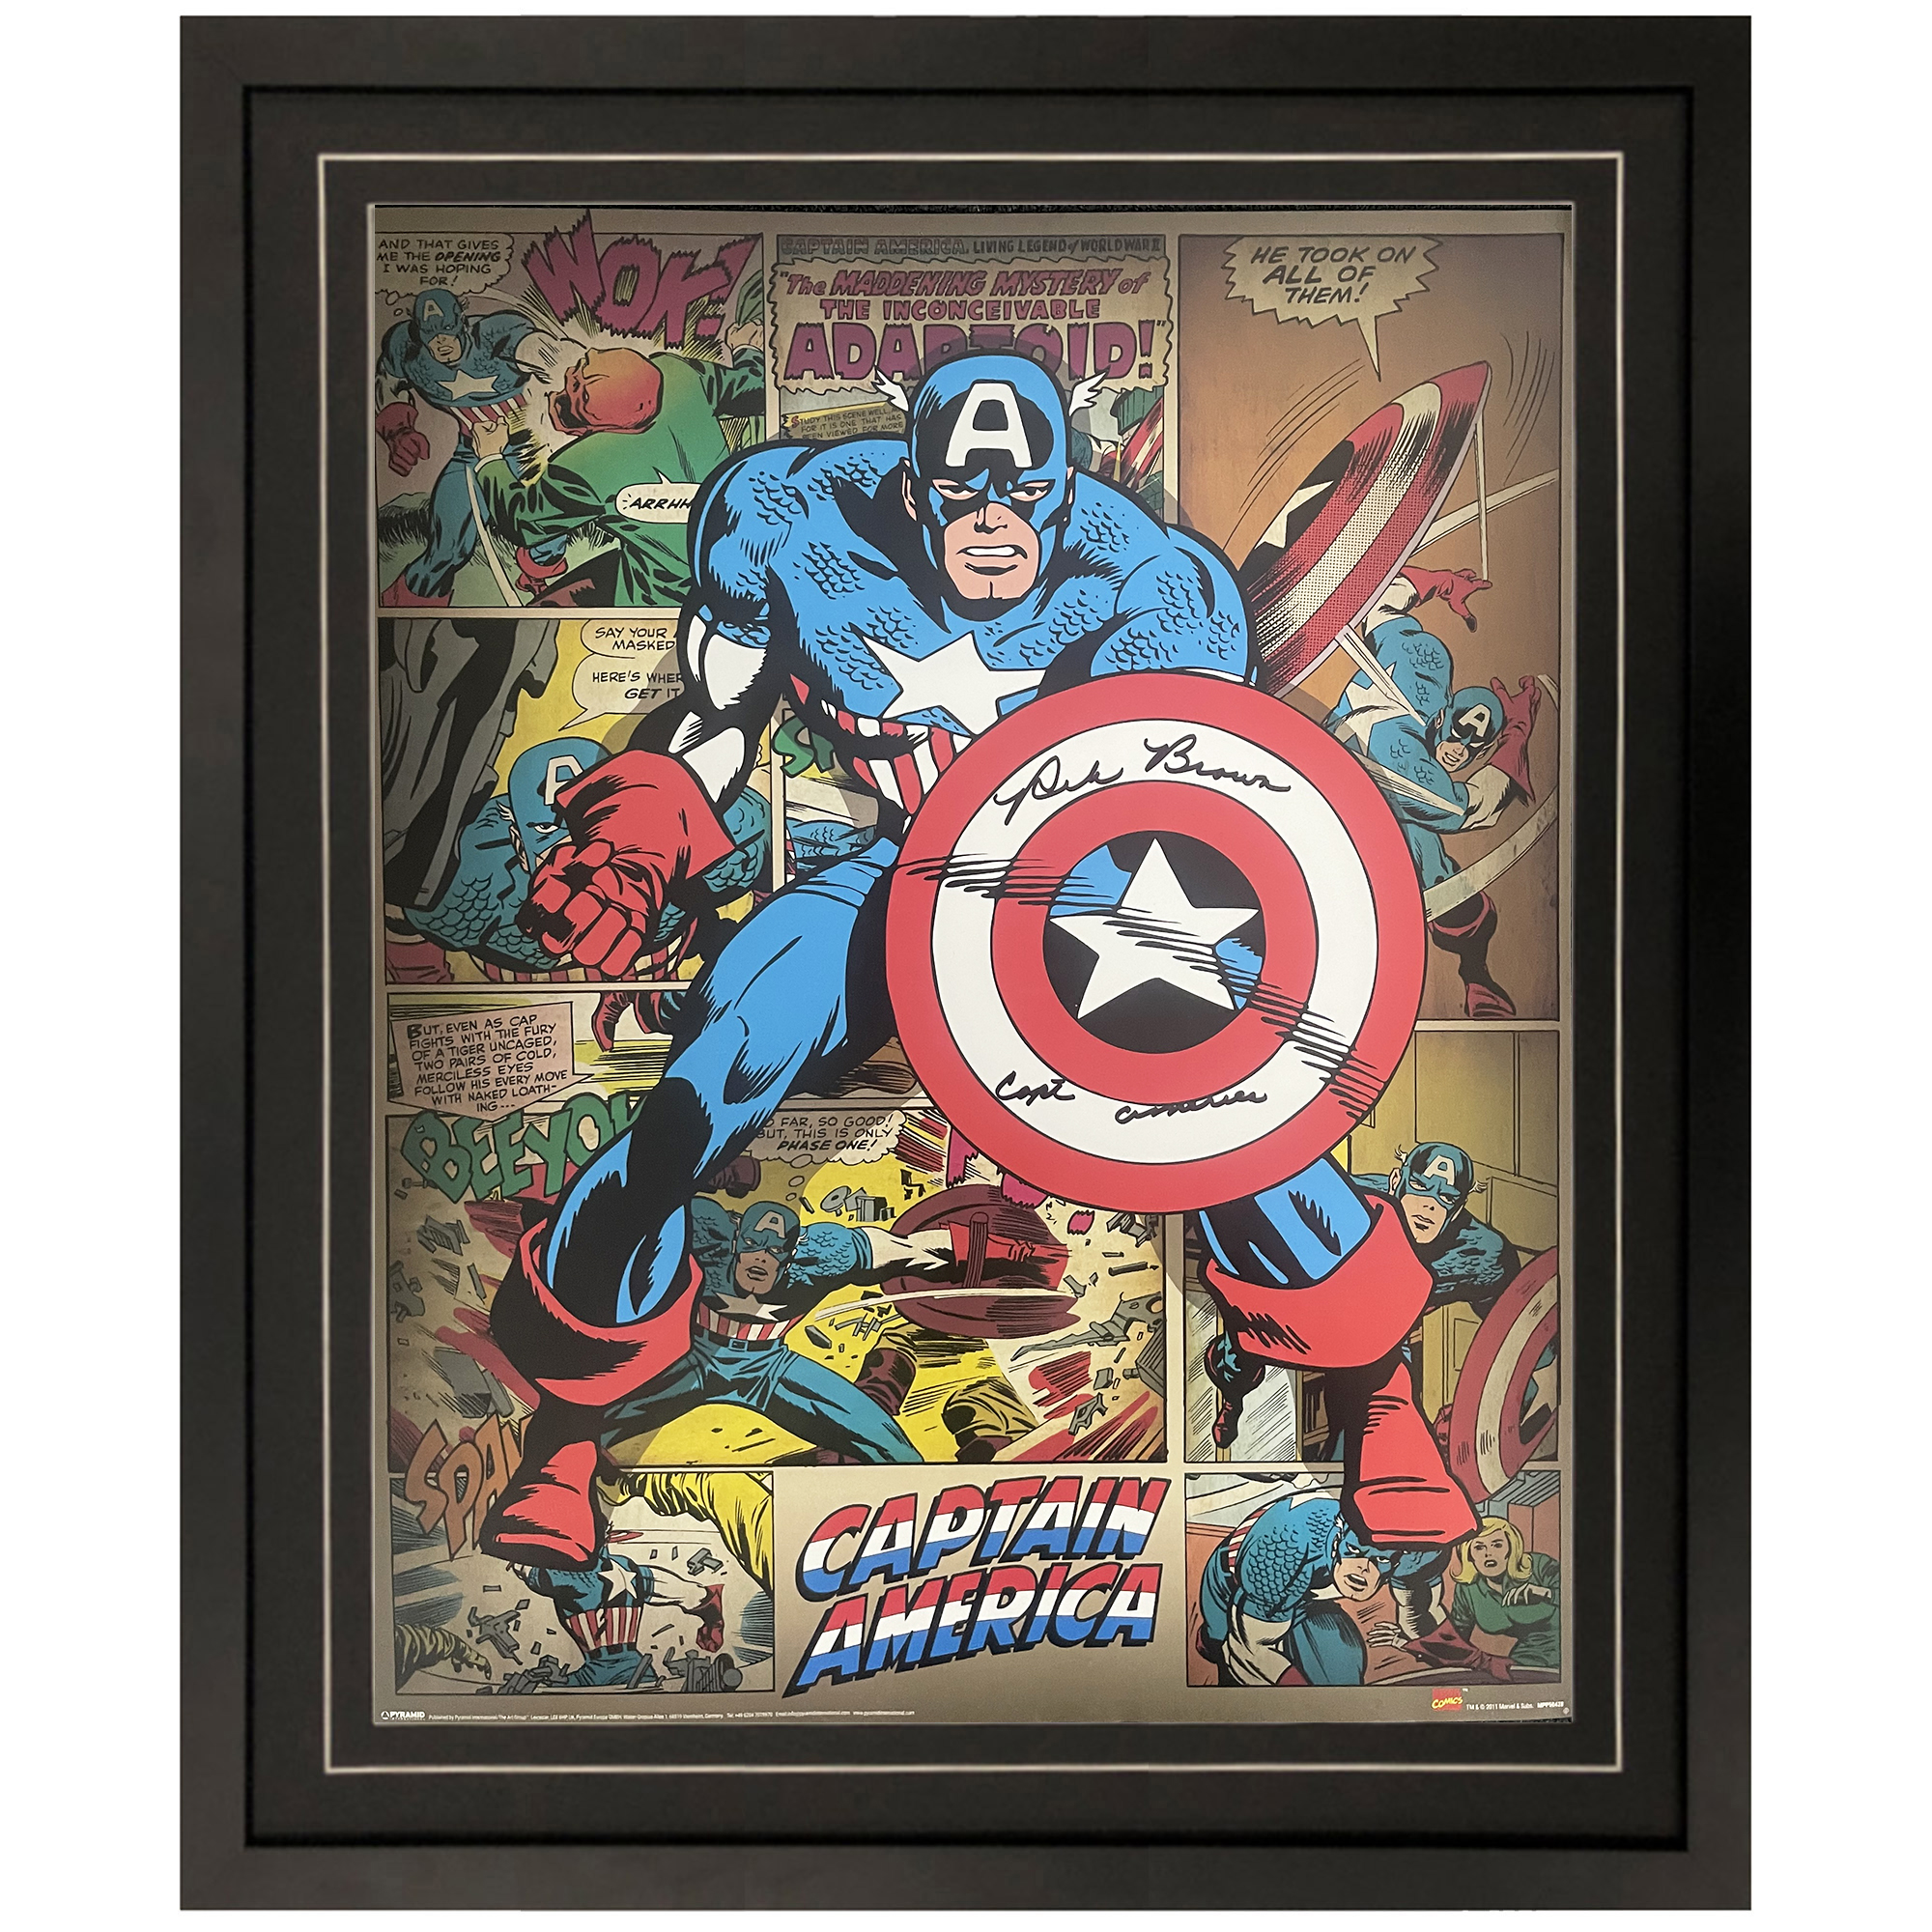 Reb Brown – “Captain America (1979)” Signed & Frame...